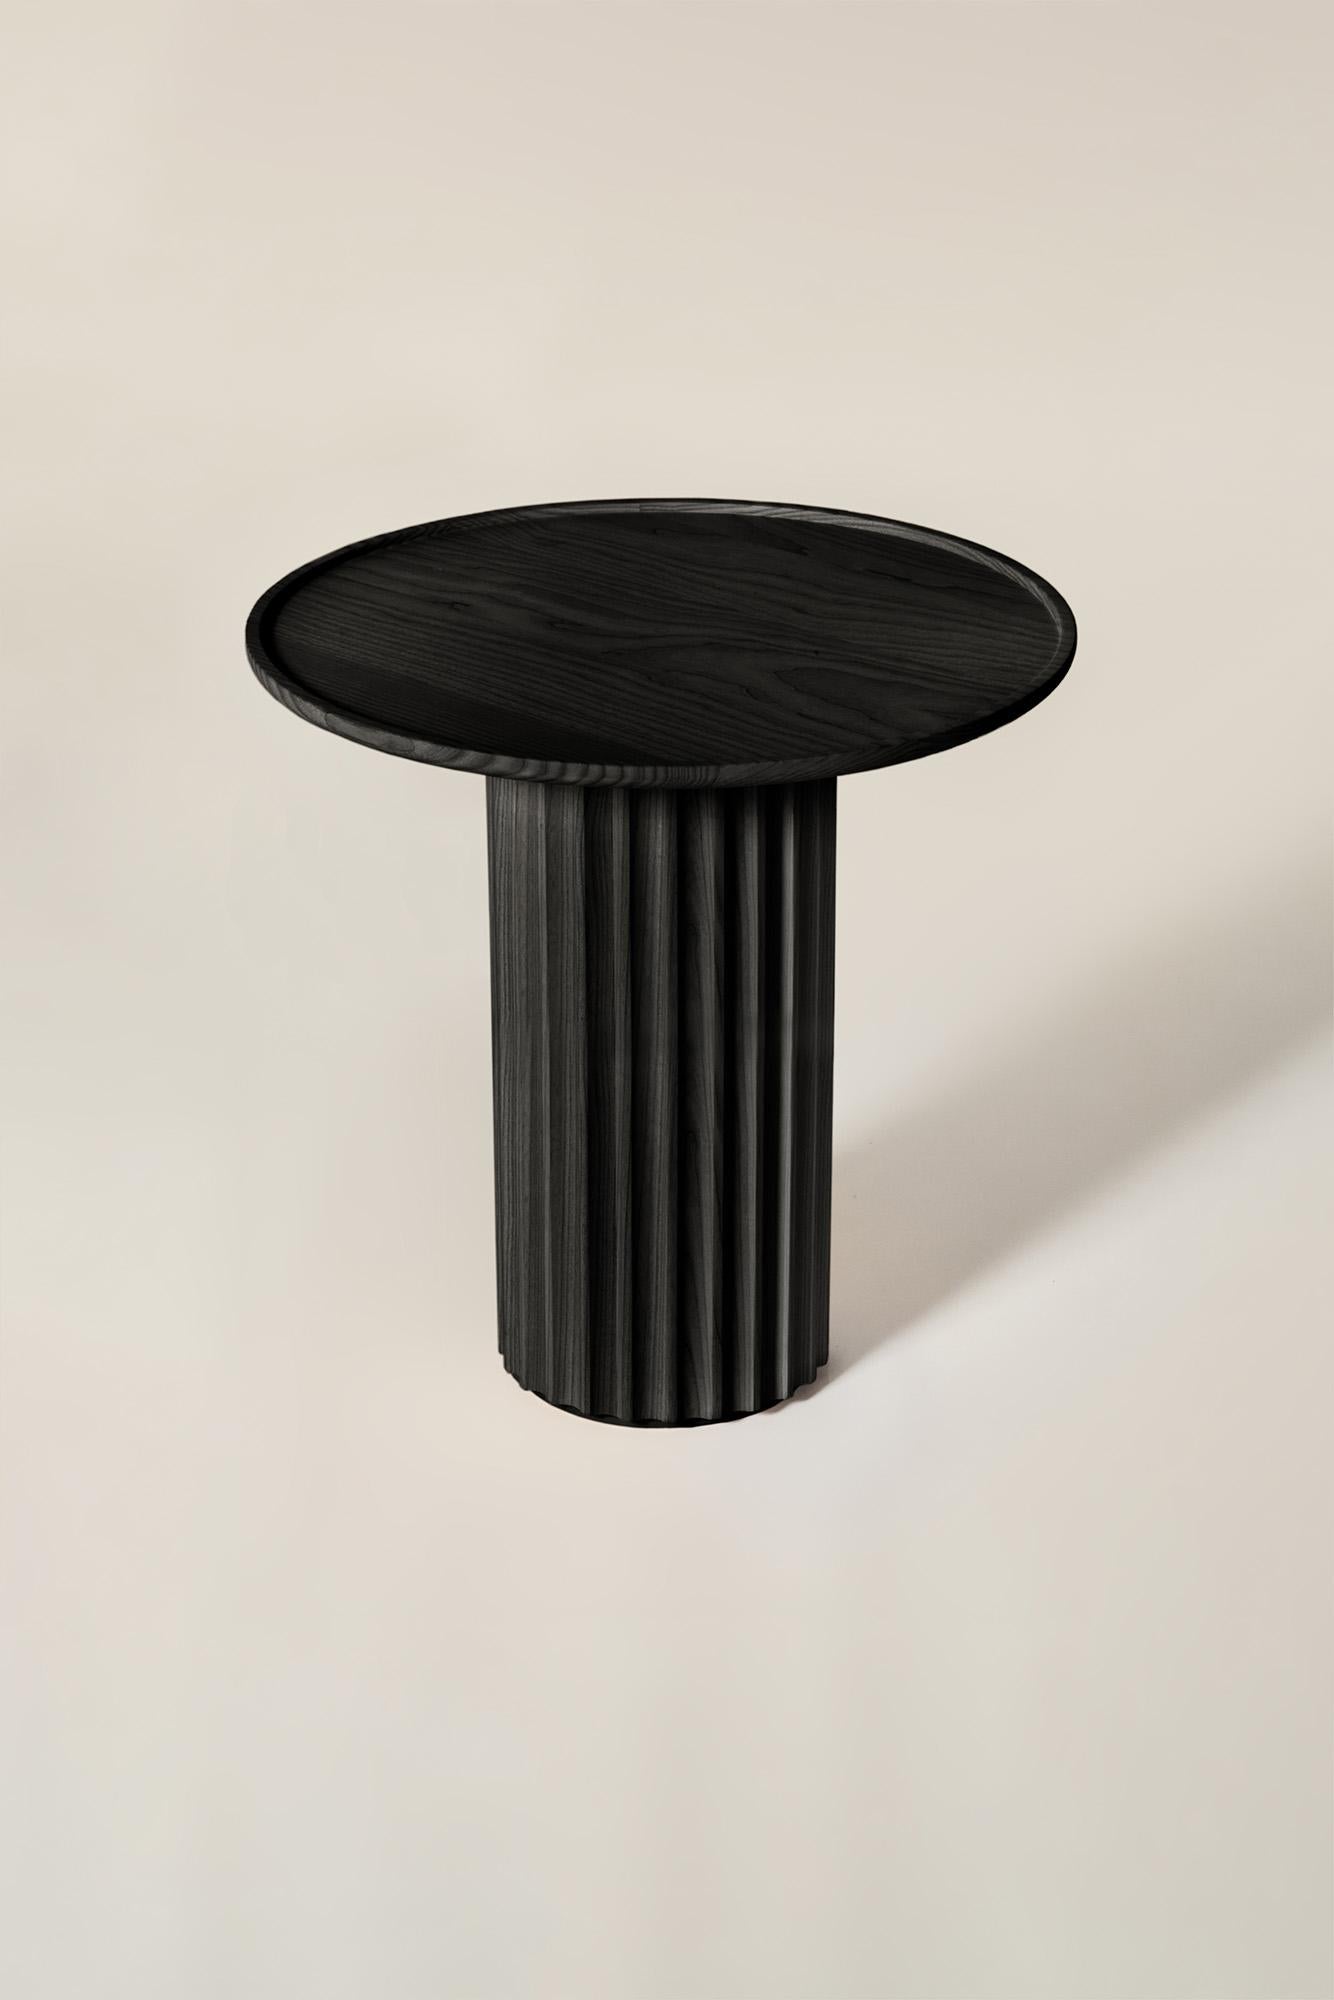 Frêne Table basse Capitello en bois massif, finition frêne noir, contemporaine en vente